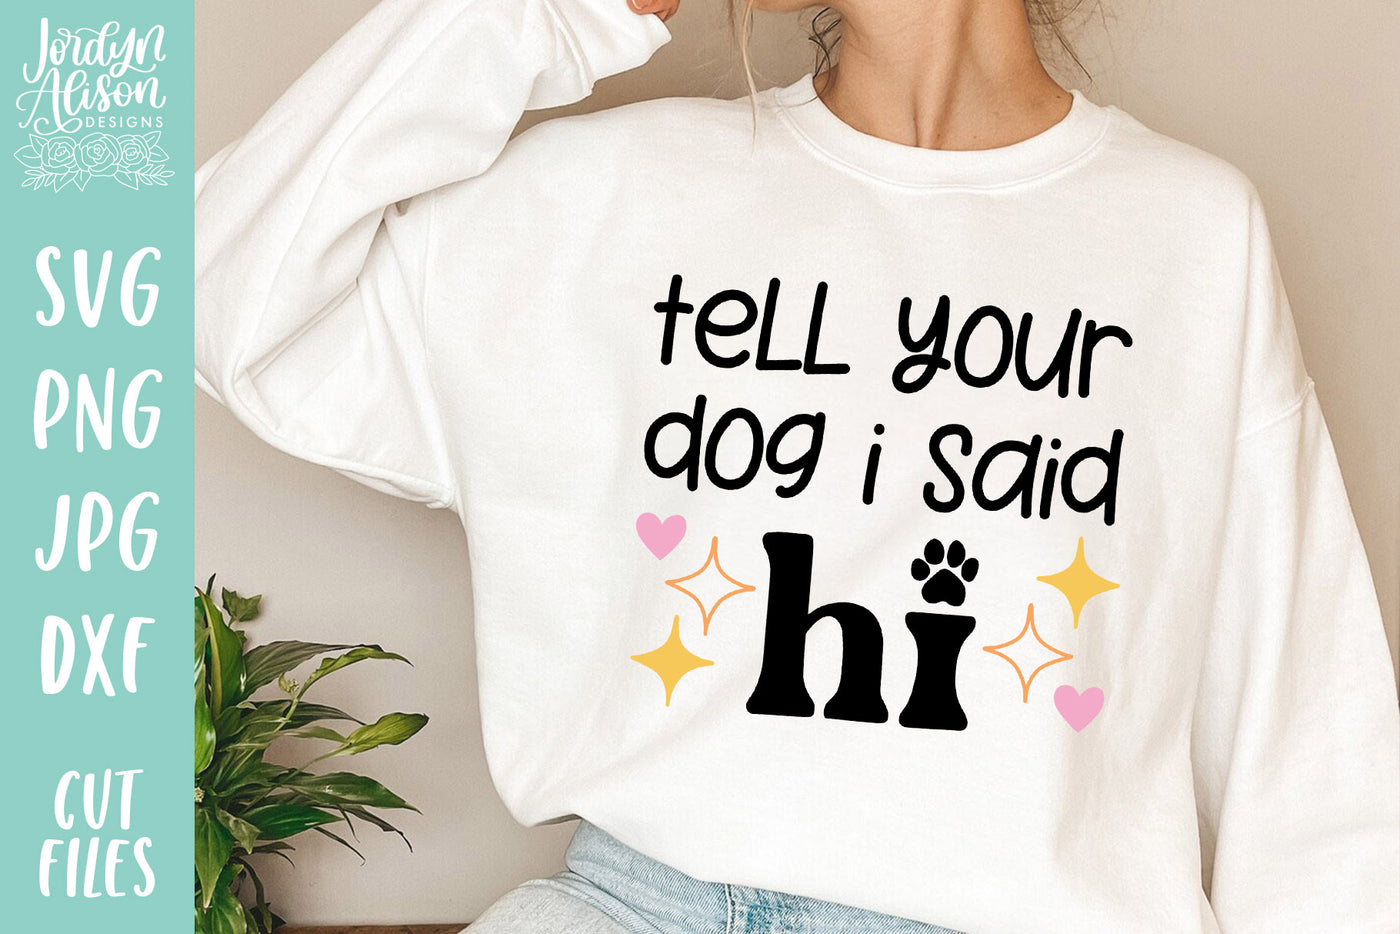 Tell Your Dog I Said Hi SVG